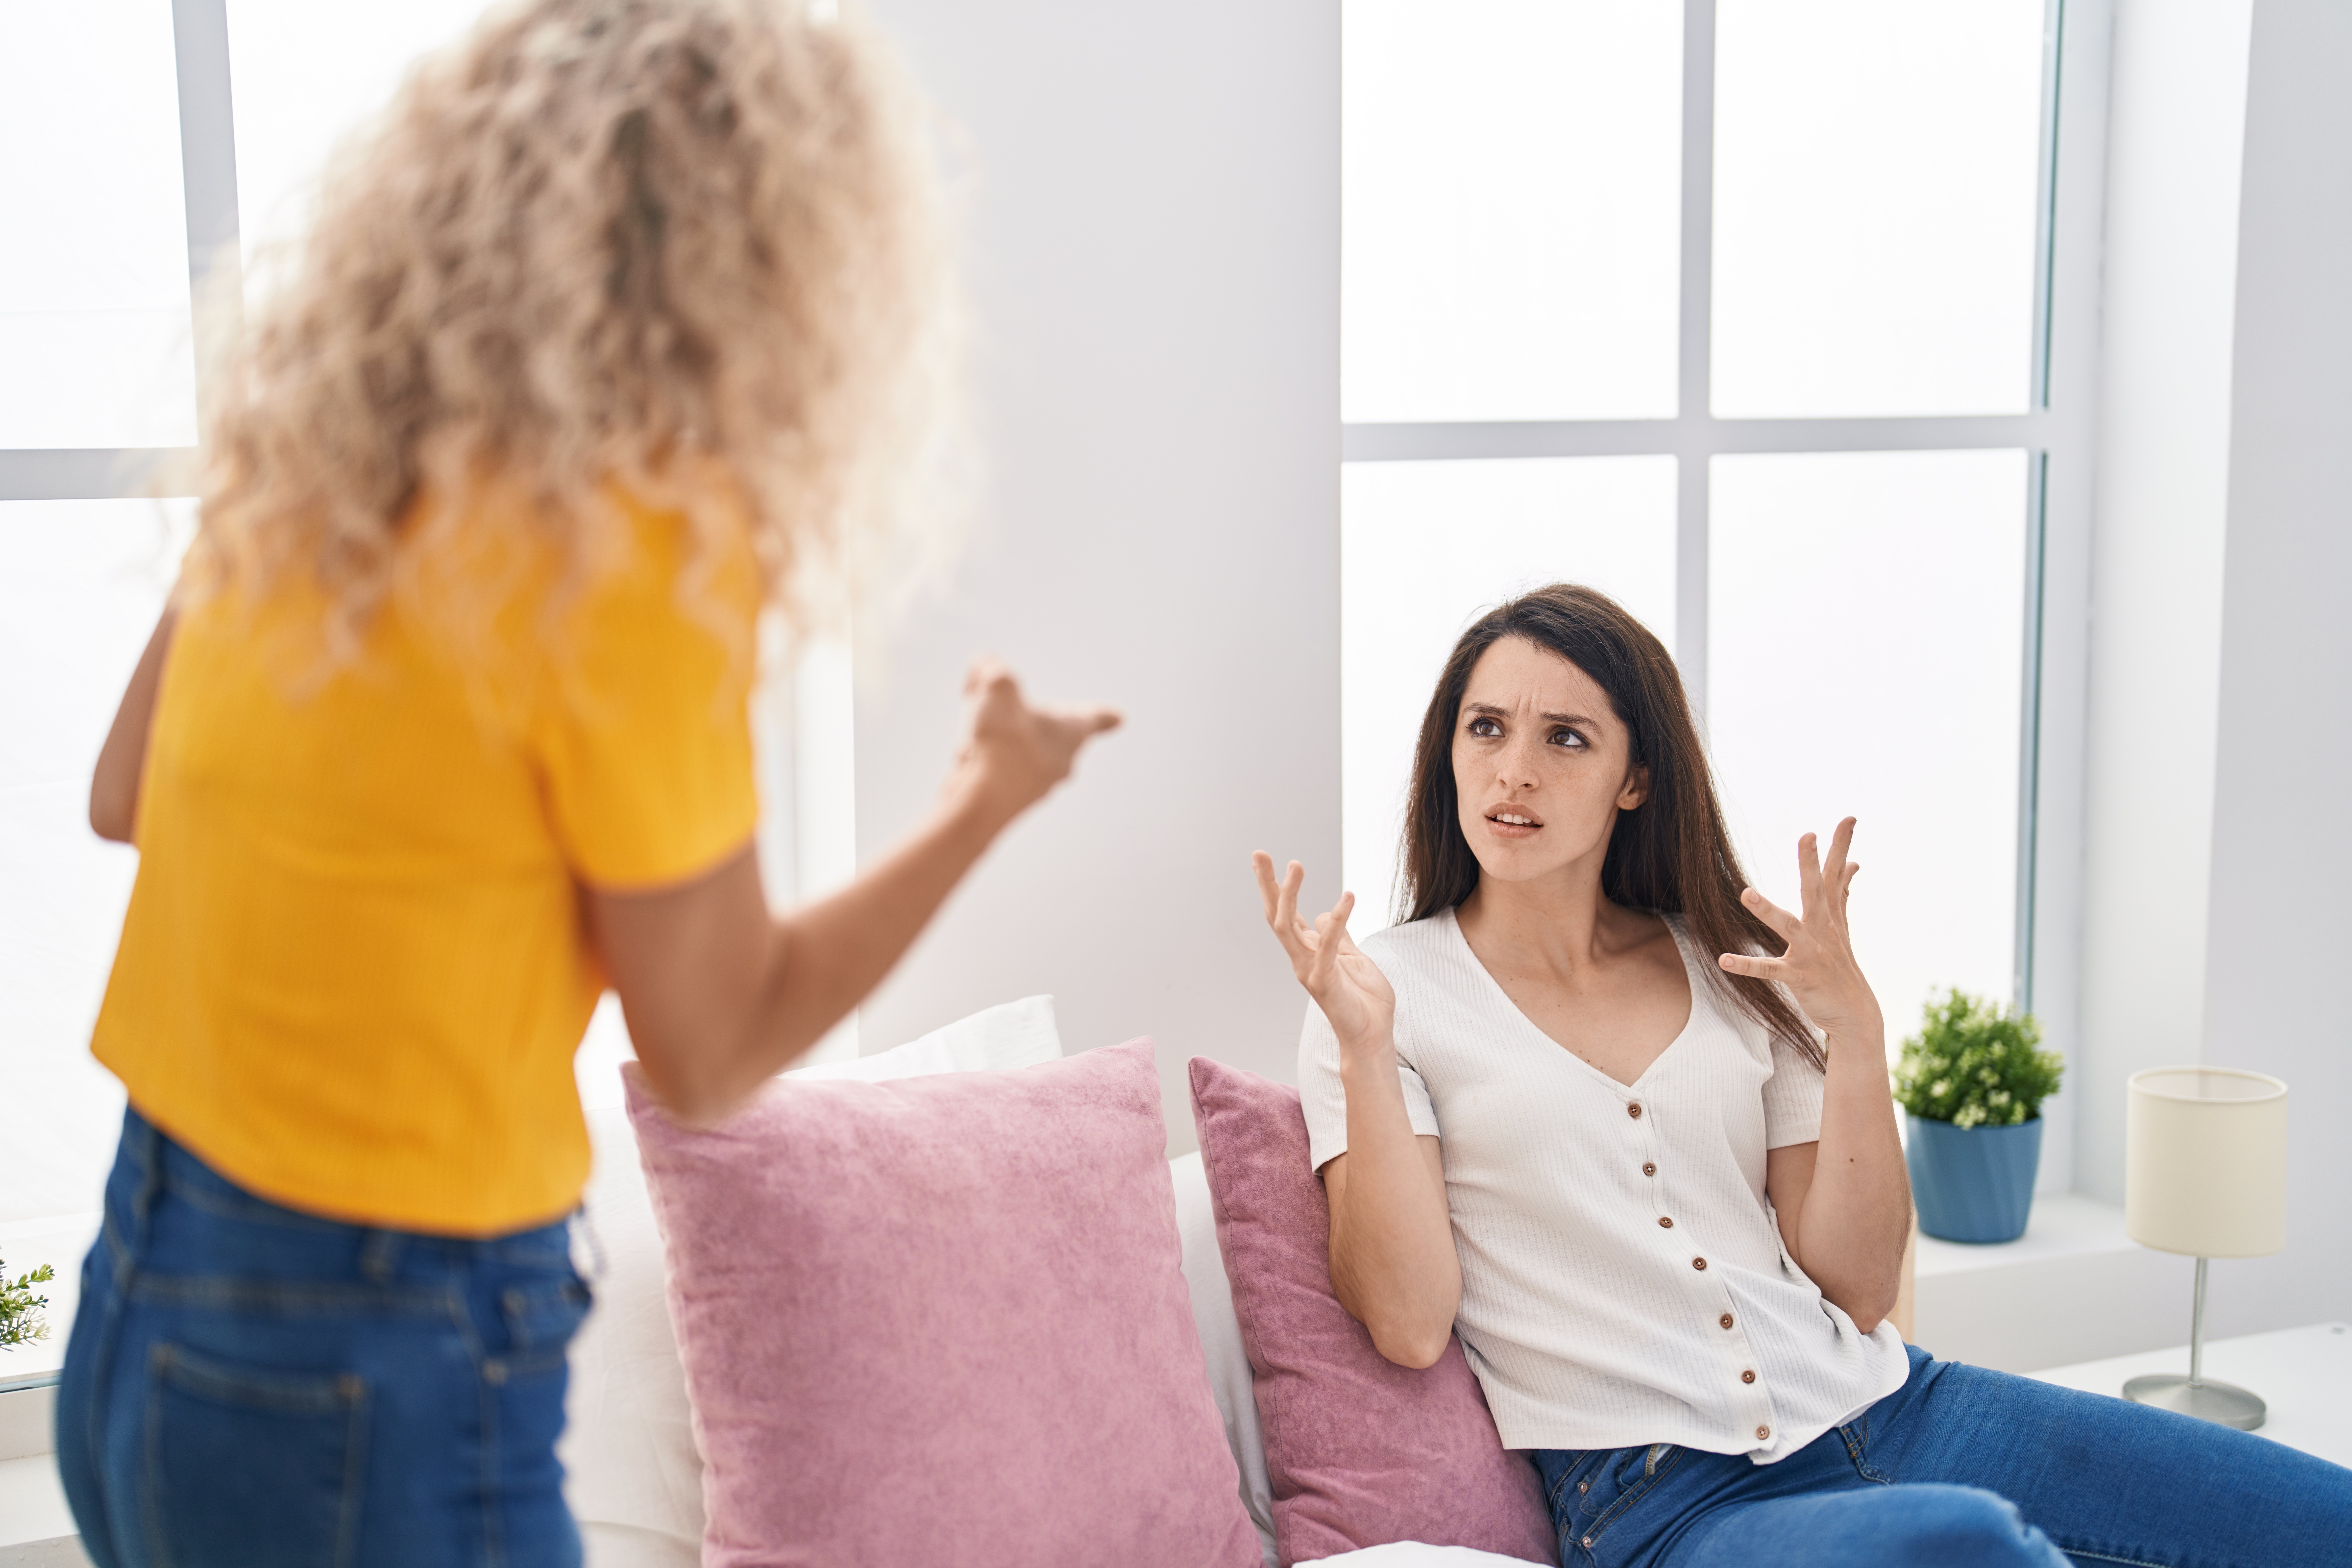 two women arguing | Source: Shutterstock